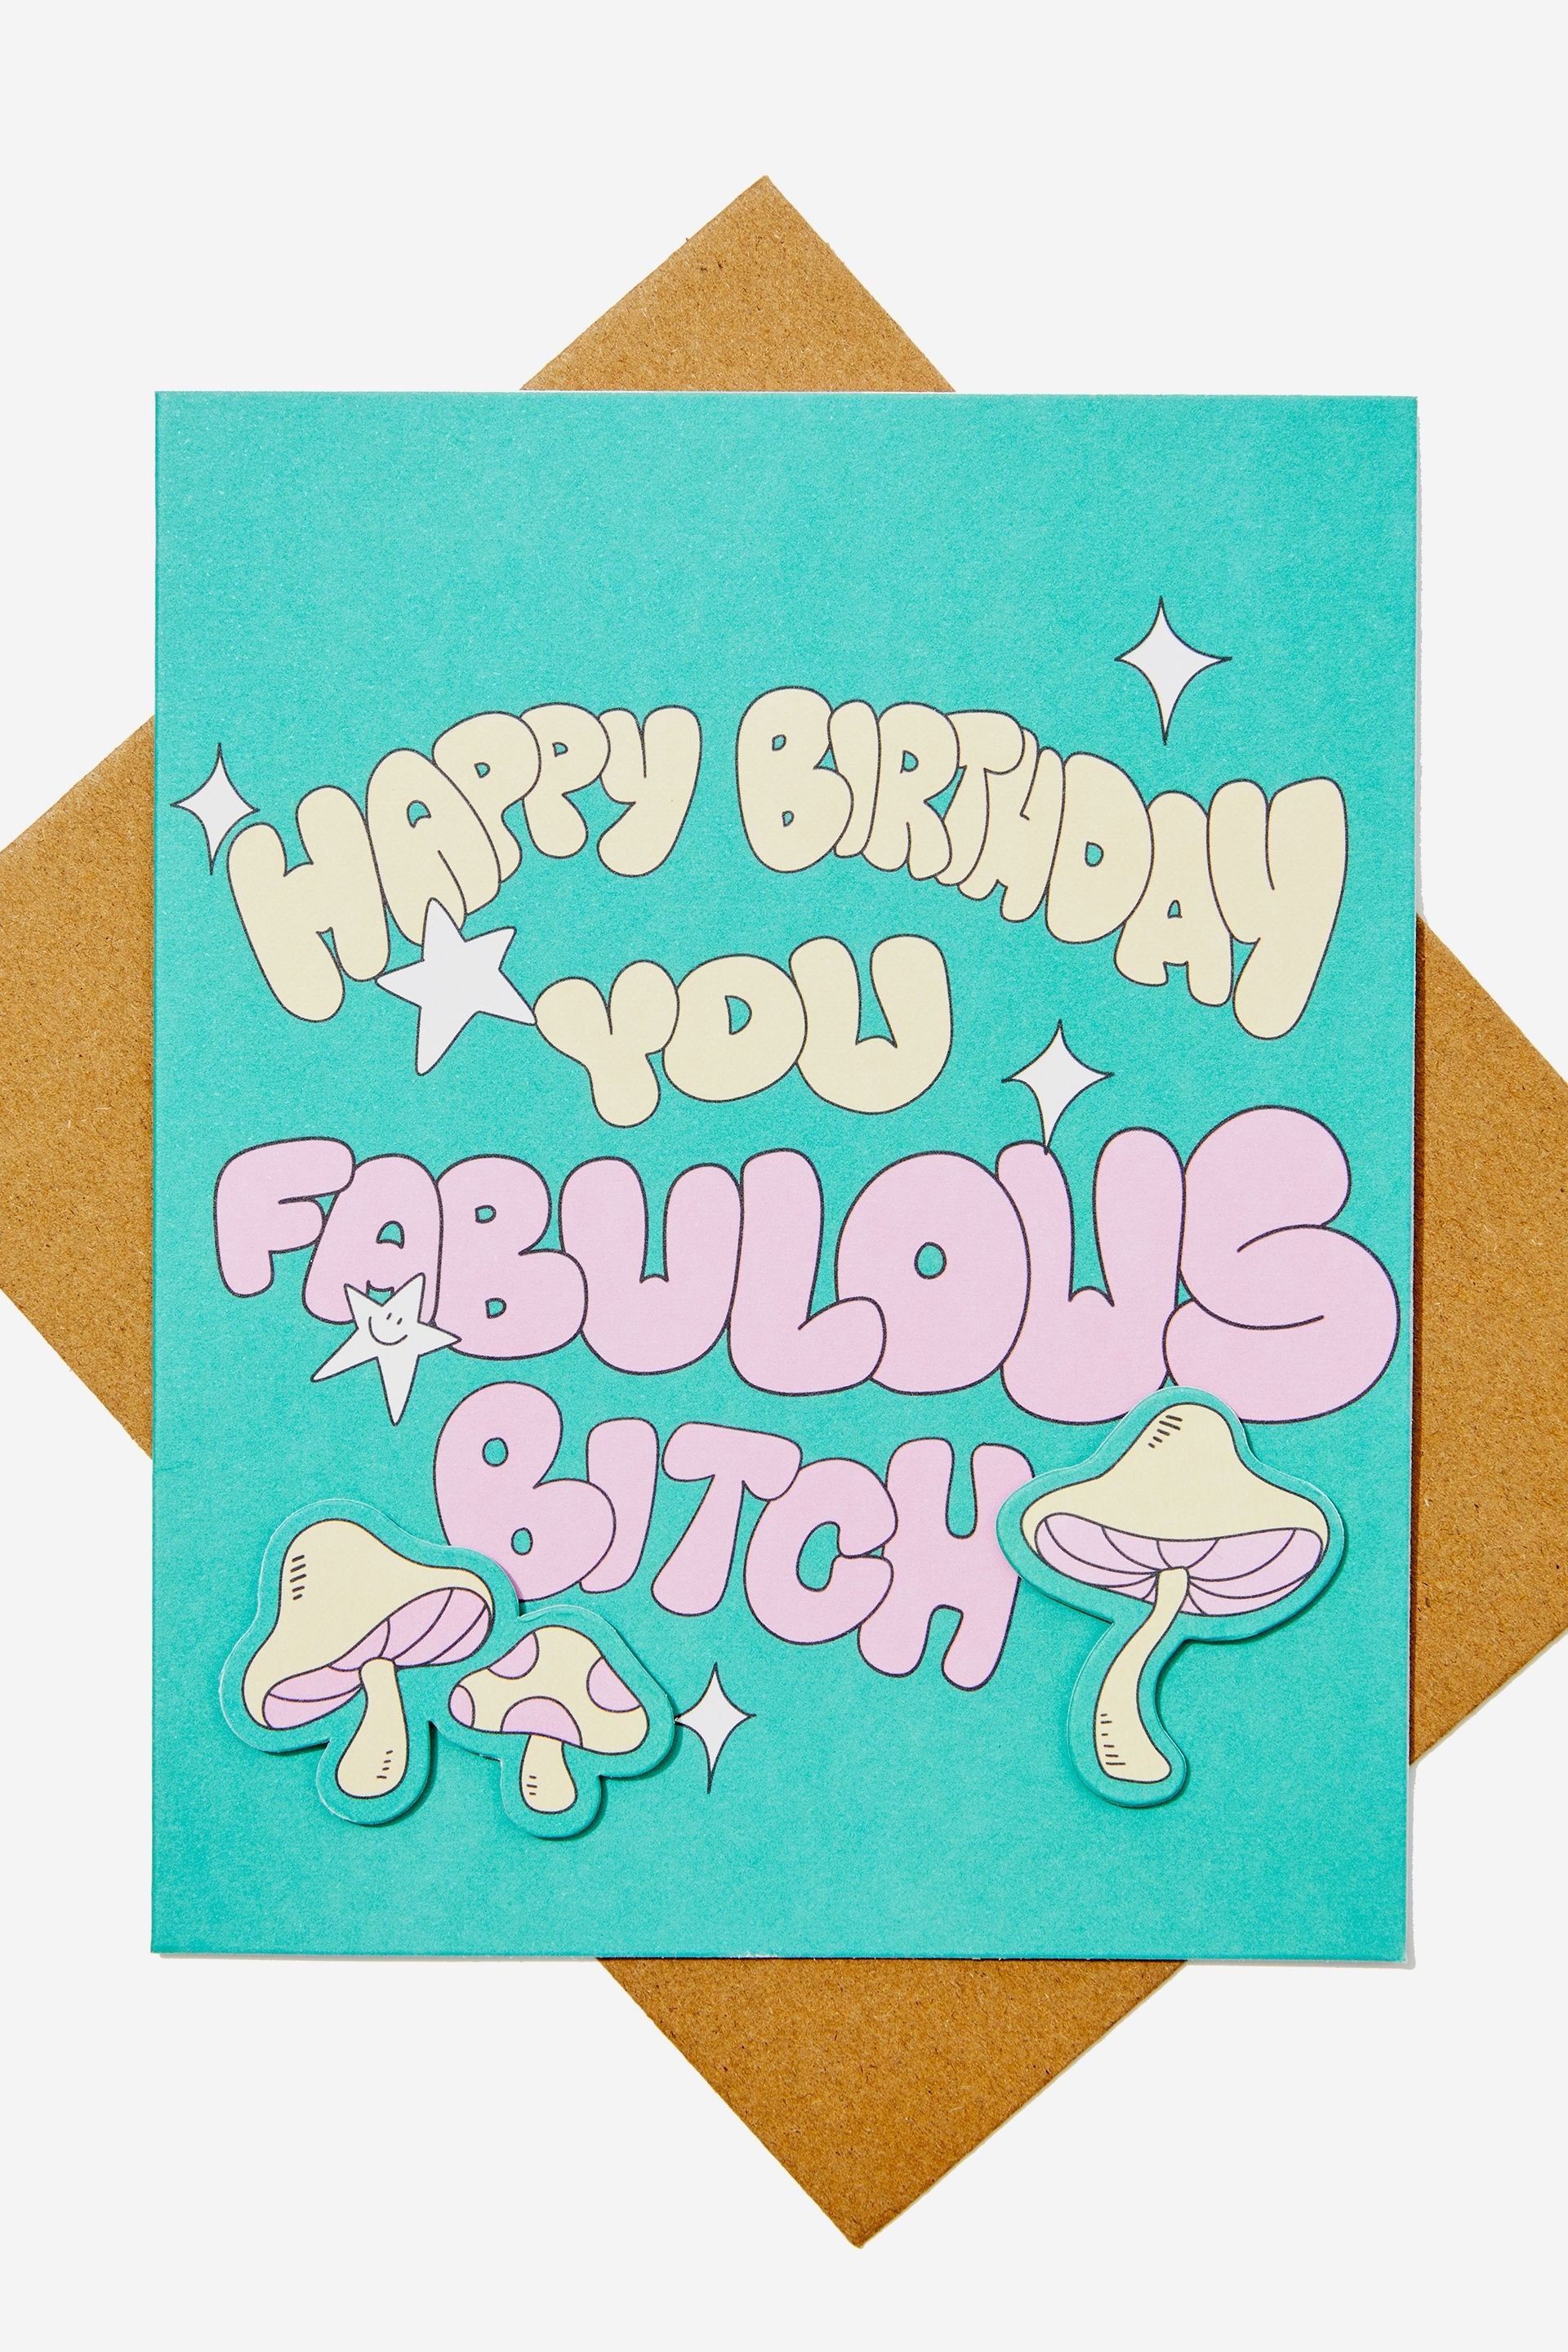 Typo - Premium Funny Birthday Card - Happy birthday fabulous b*tch mushrooms!